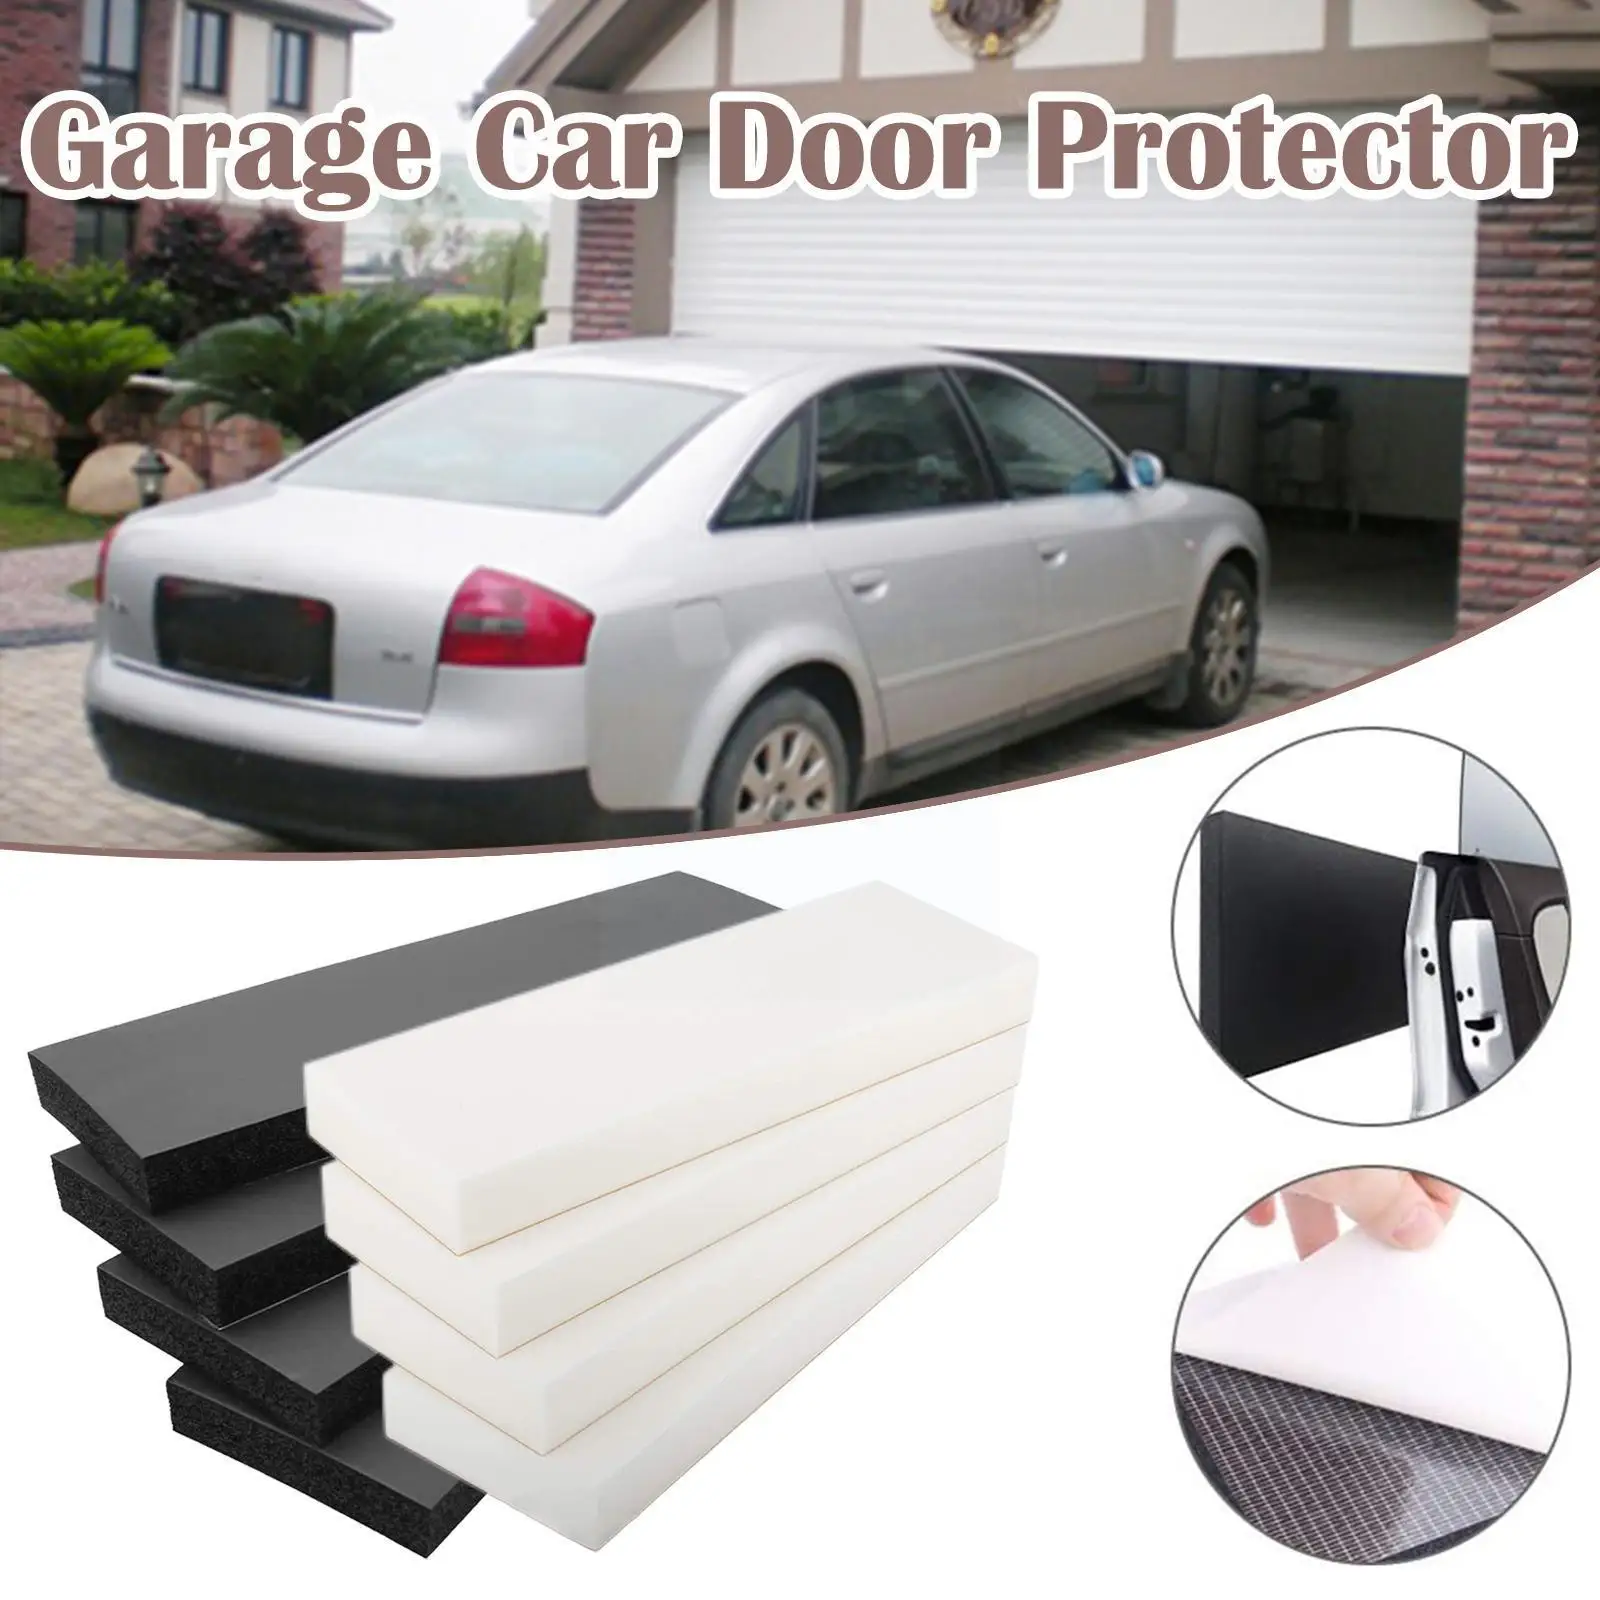 https://ae01.alicdn.com/kf/S850ec62a224f443a8e584d278cc50f01K/Garage-Wall-Protector-4PCS-Garage-Car-Door-Protector-Foam-Bumper-Guard-For-Car-Doors-Anti-Collision.jpg